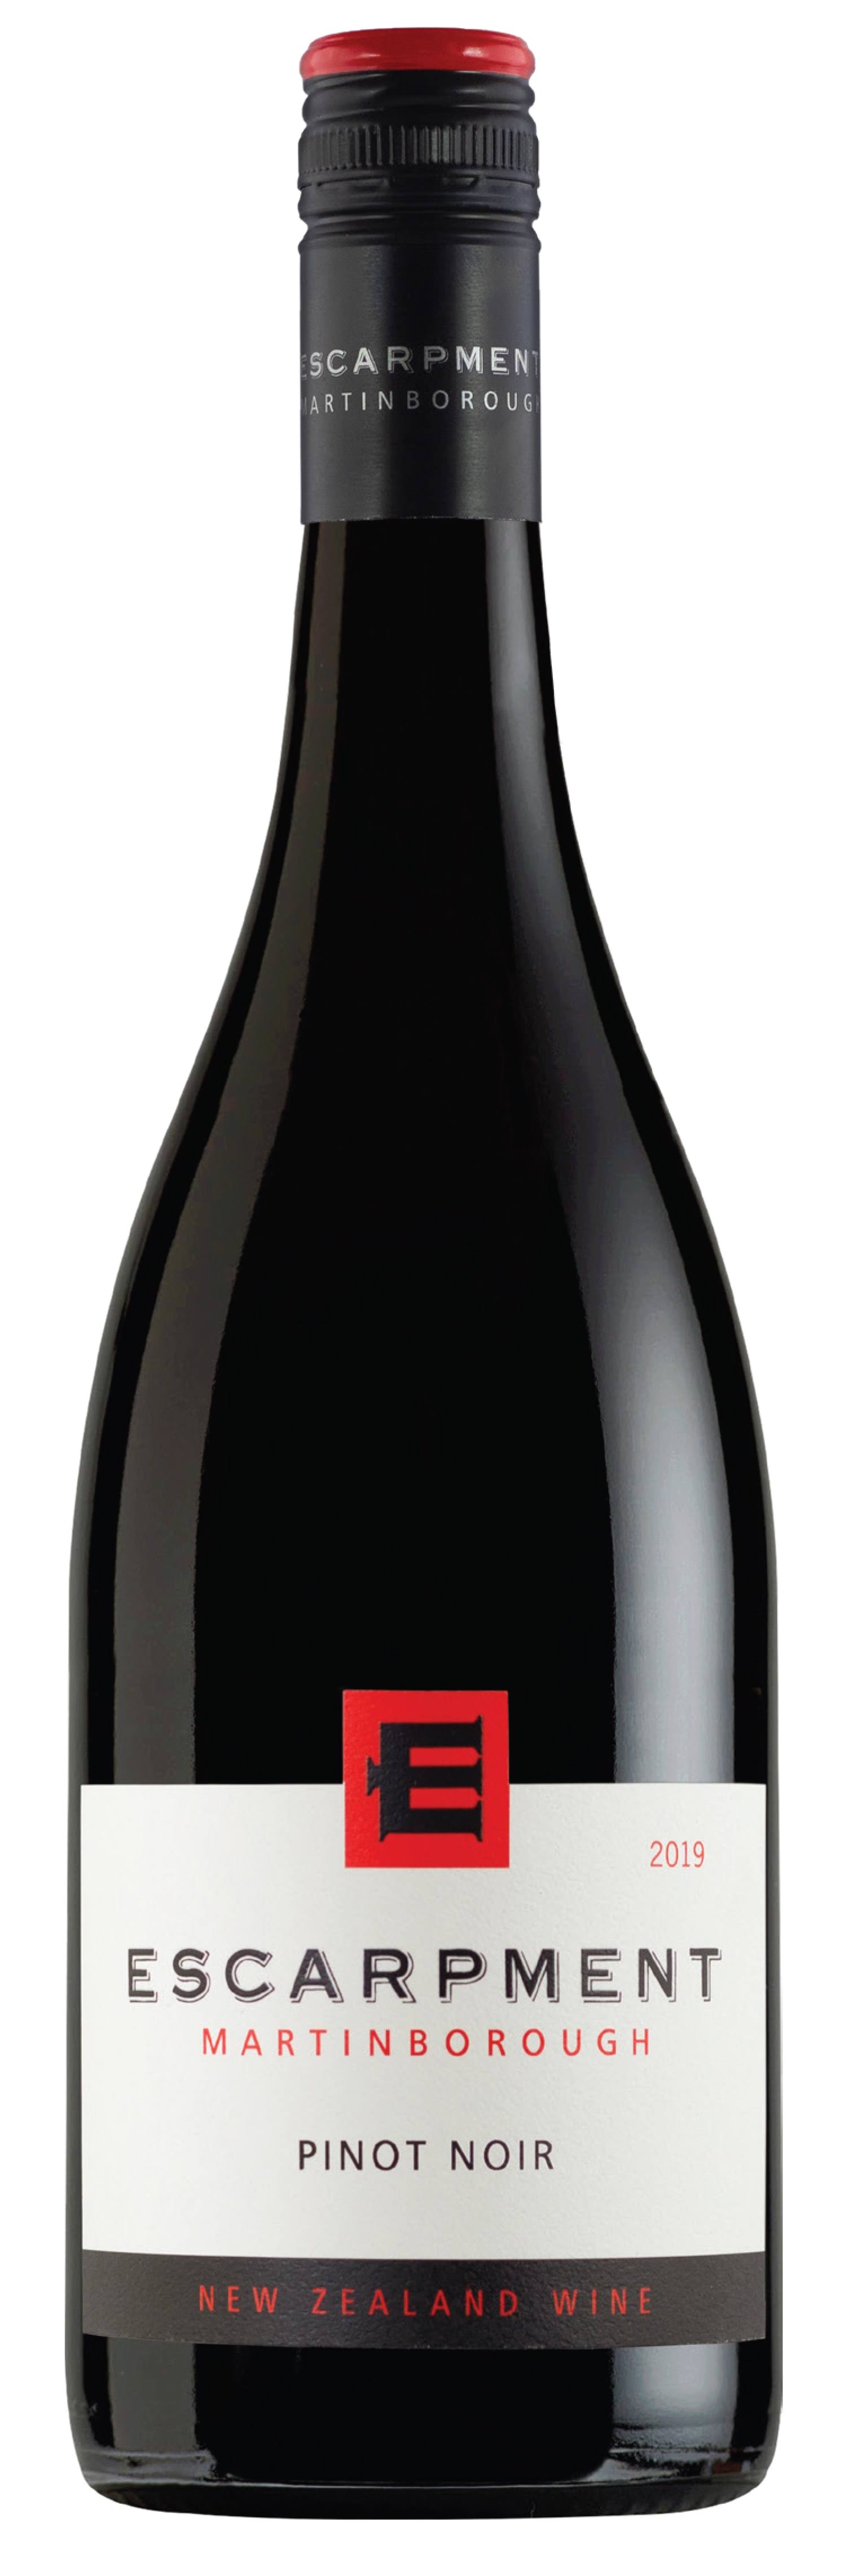 Escarpment Pinot Noir 2016 Red Wine from New Zealand - 750ml